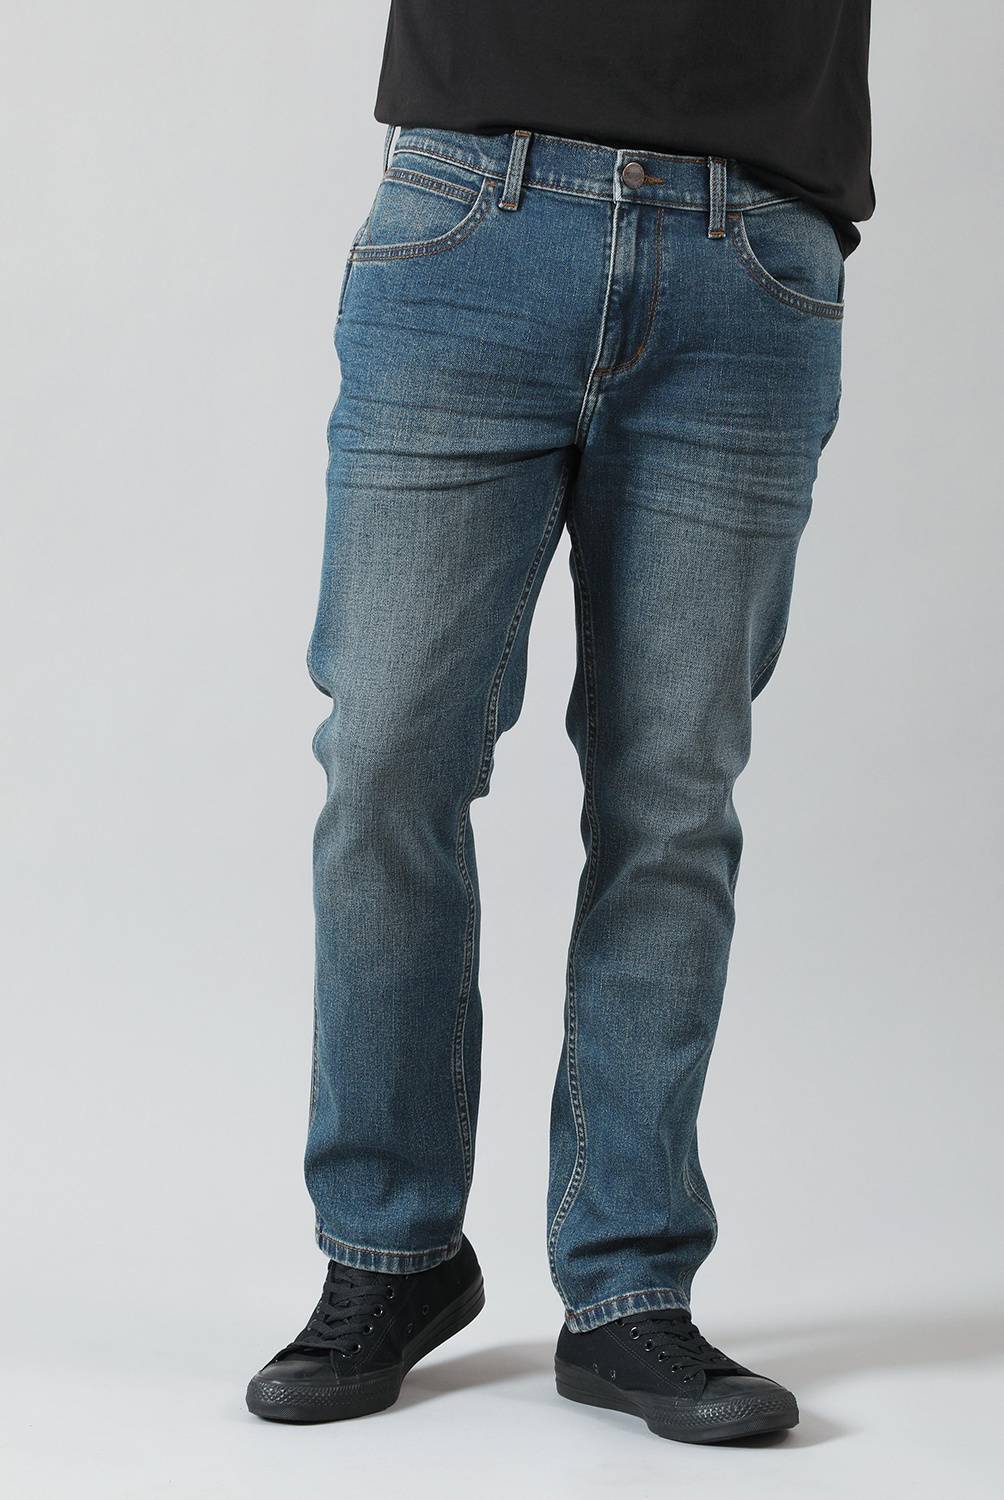 Wrangler - Wrangler Jeans Slim Fit Hombre